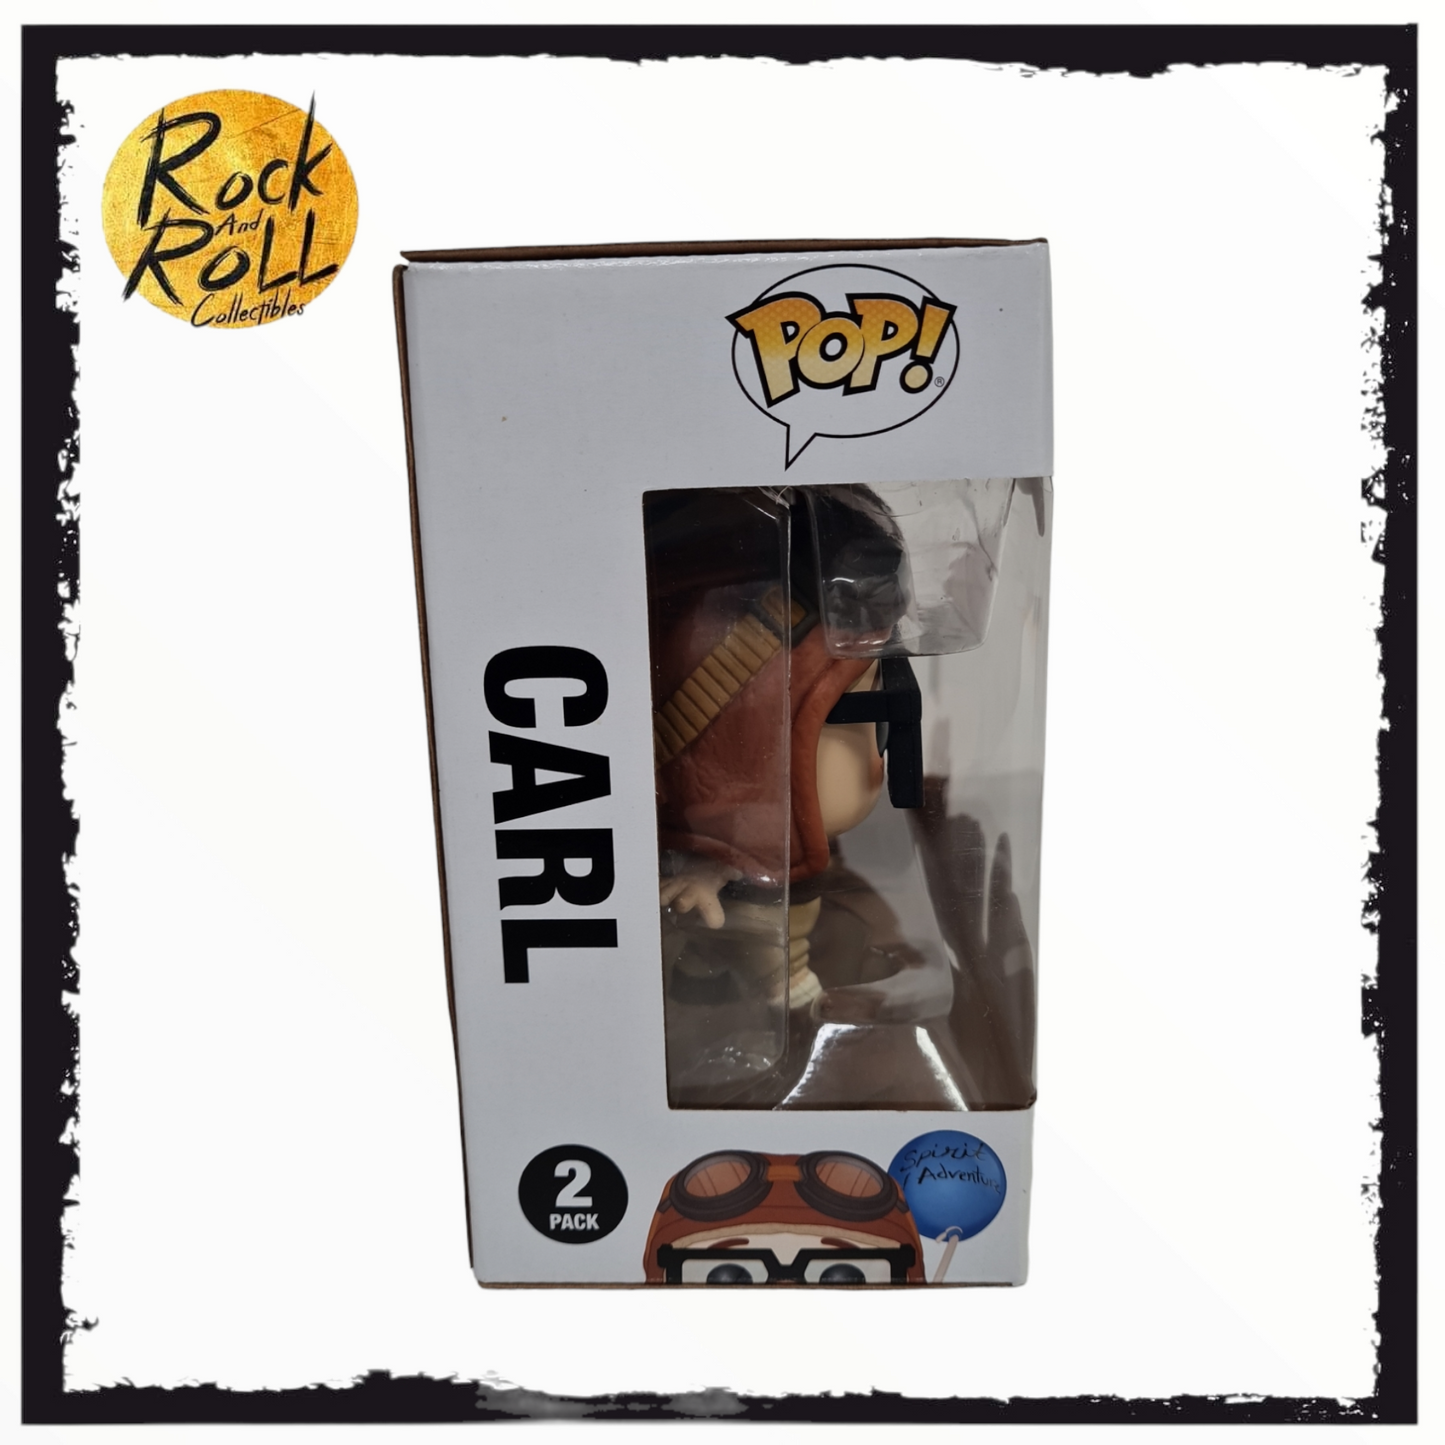 Carl & Ellie - UP 2 Pack Funko Pop! 2019 Summer Convention Shared Sticker